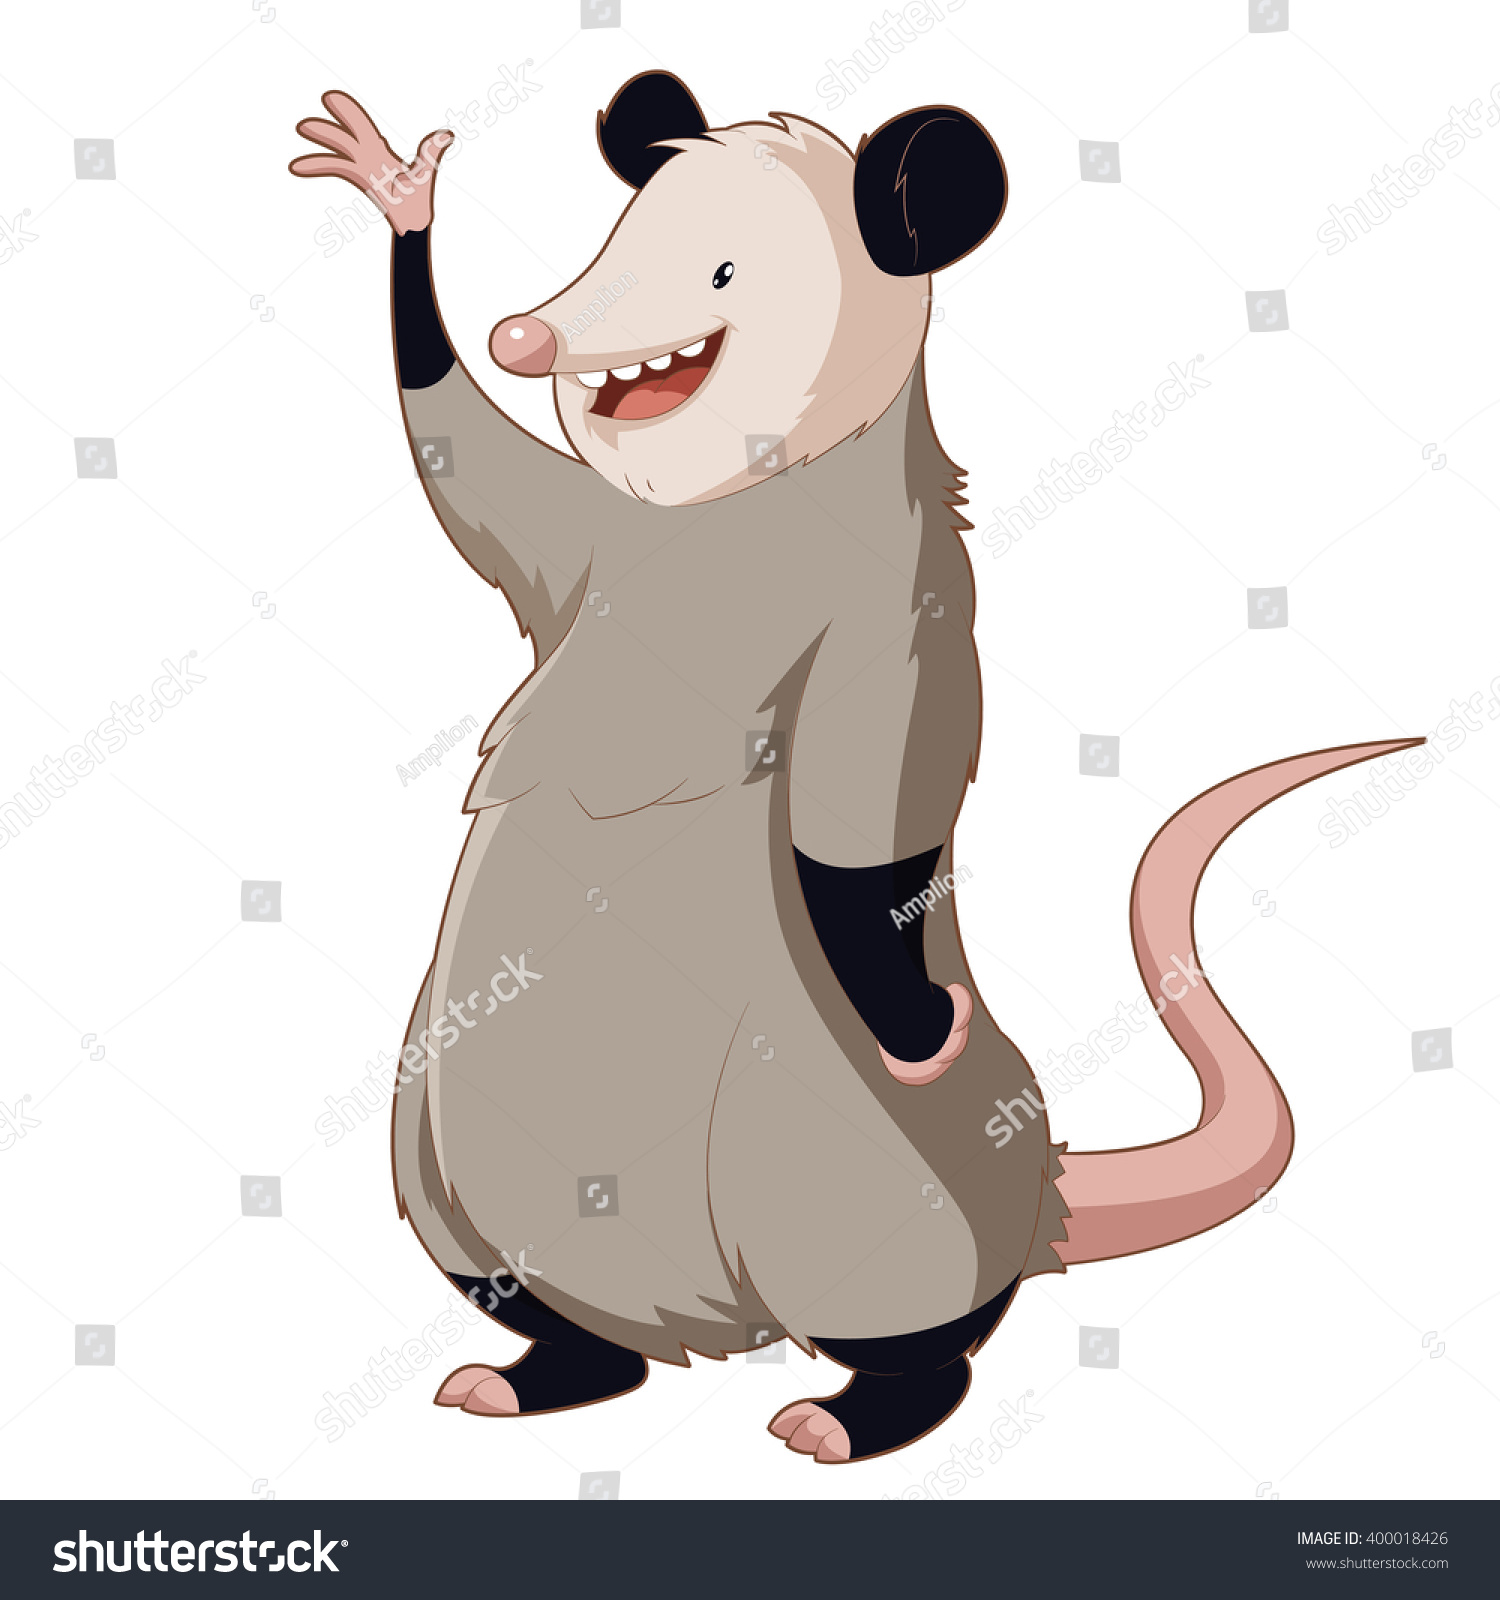 Cartoon Smiling Opossum Stock Vector 400018426 - Shutterstock